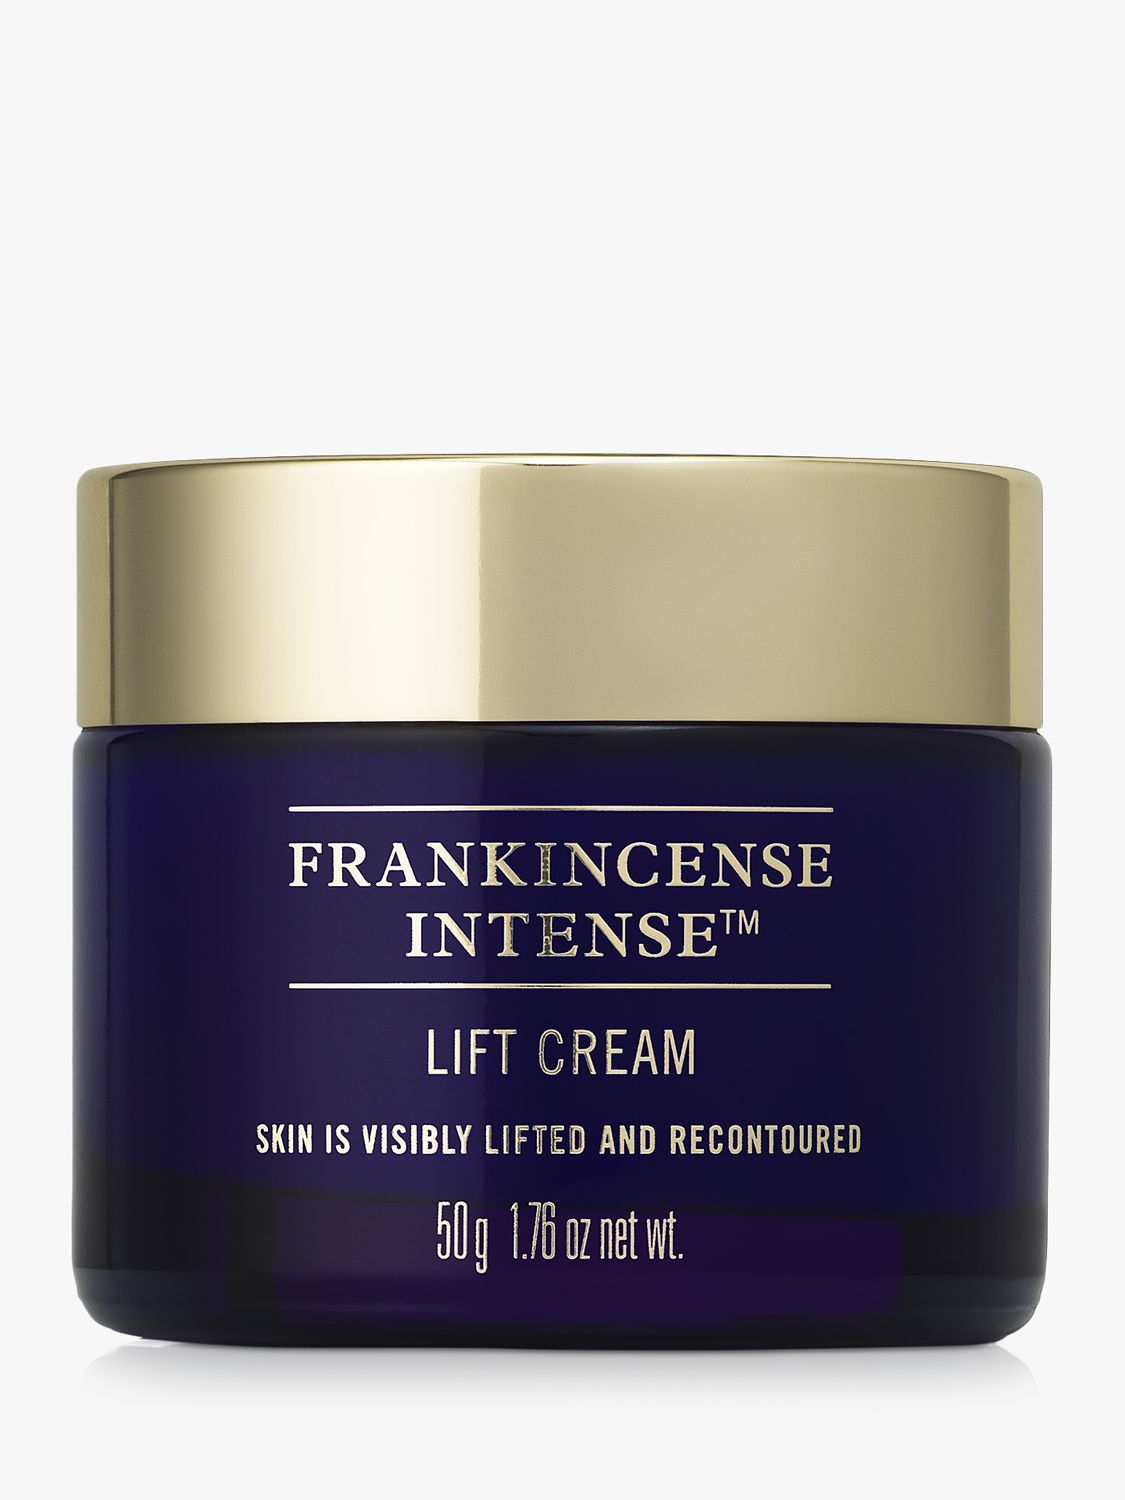 Neal's Yard Remedies Frankincense Intense™ Lift Cream, 50g 1